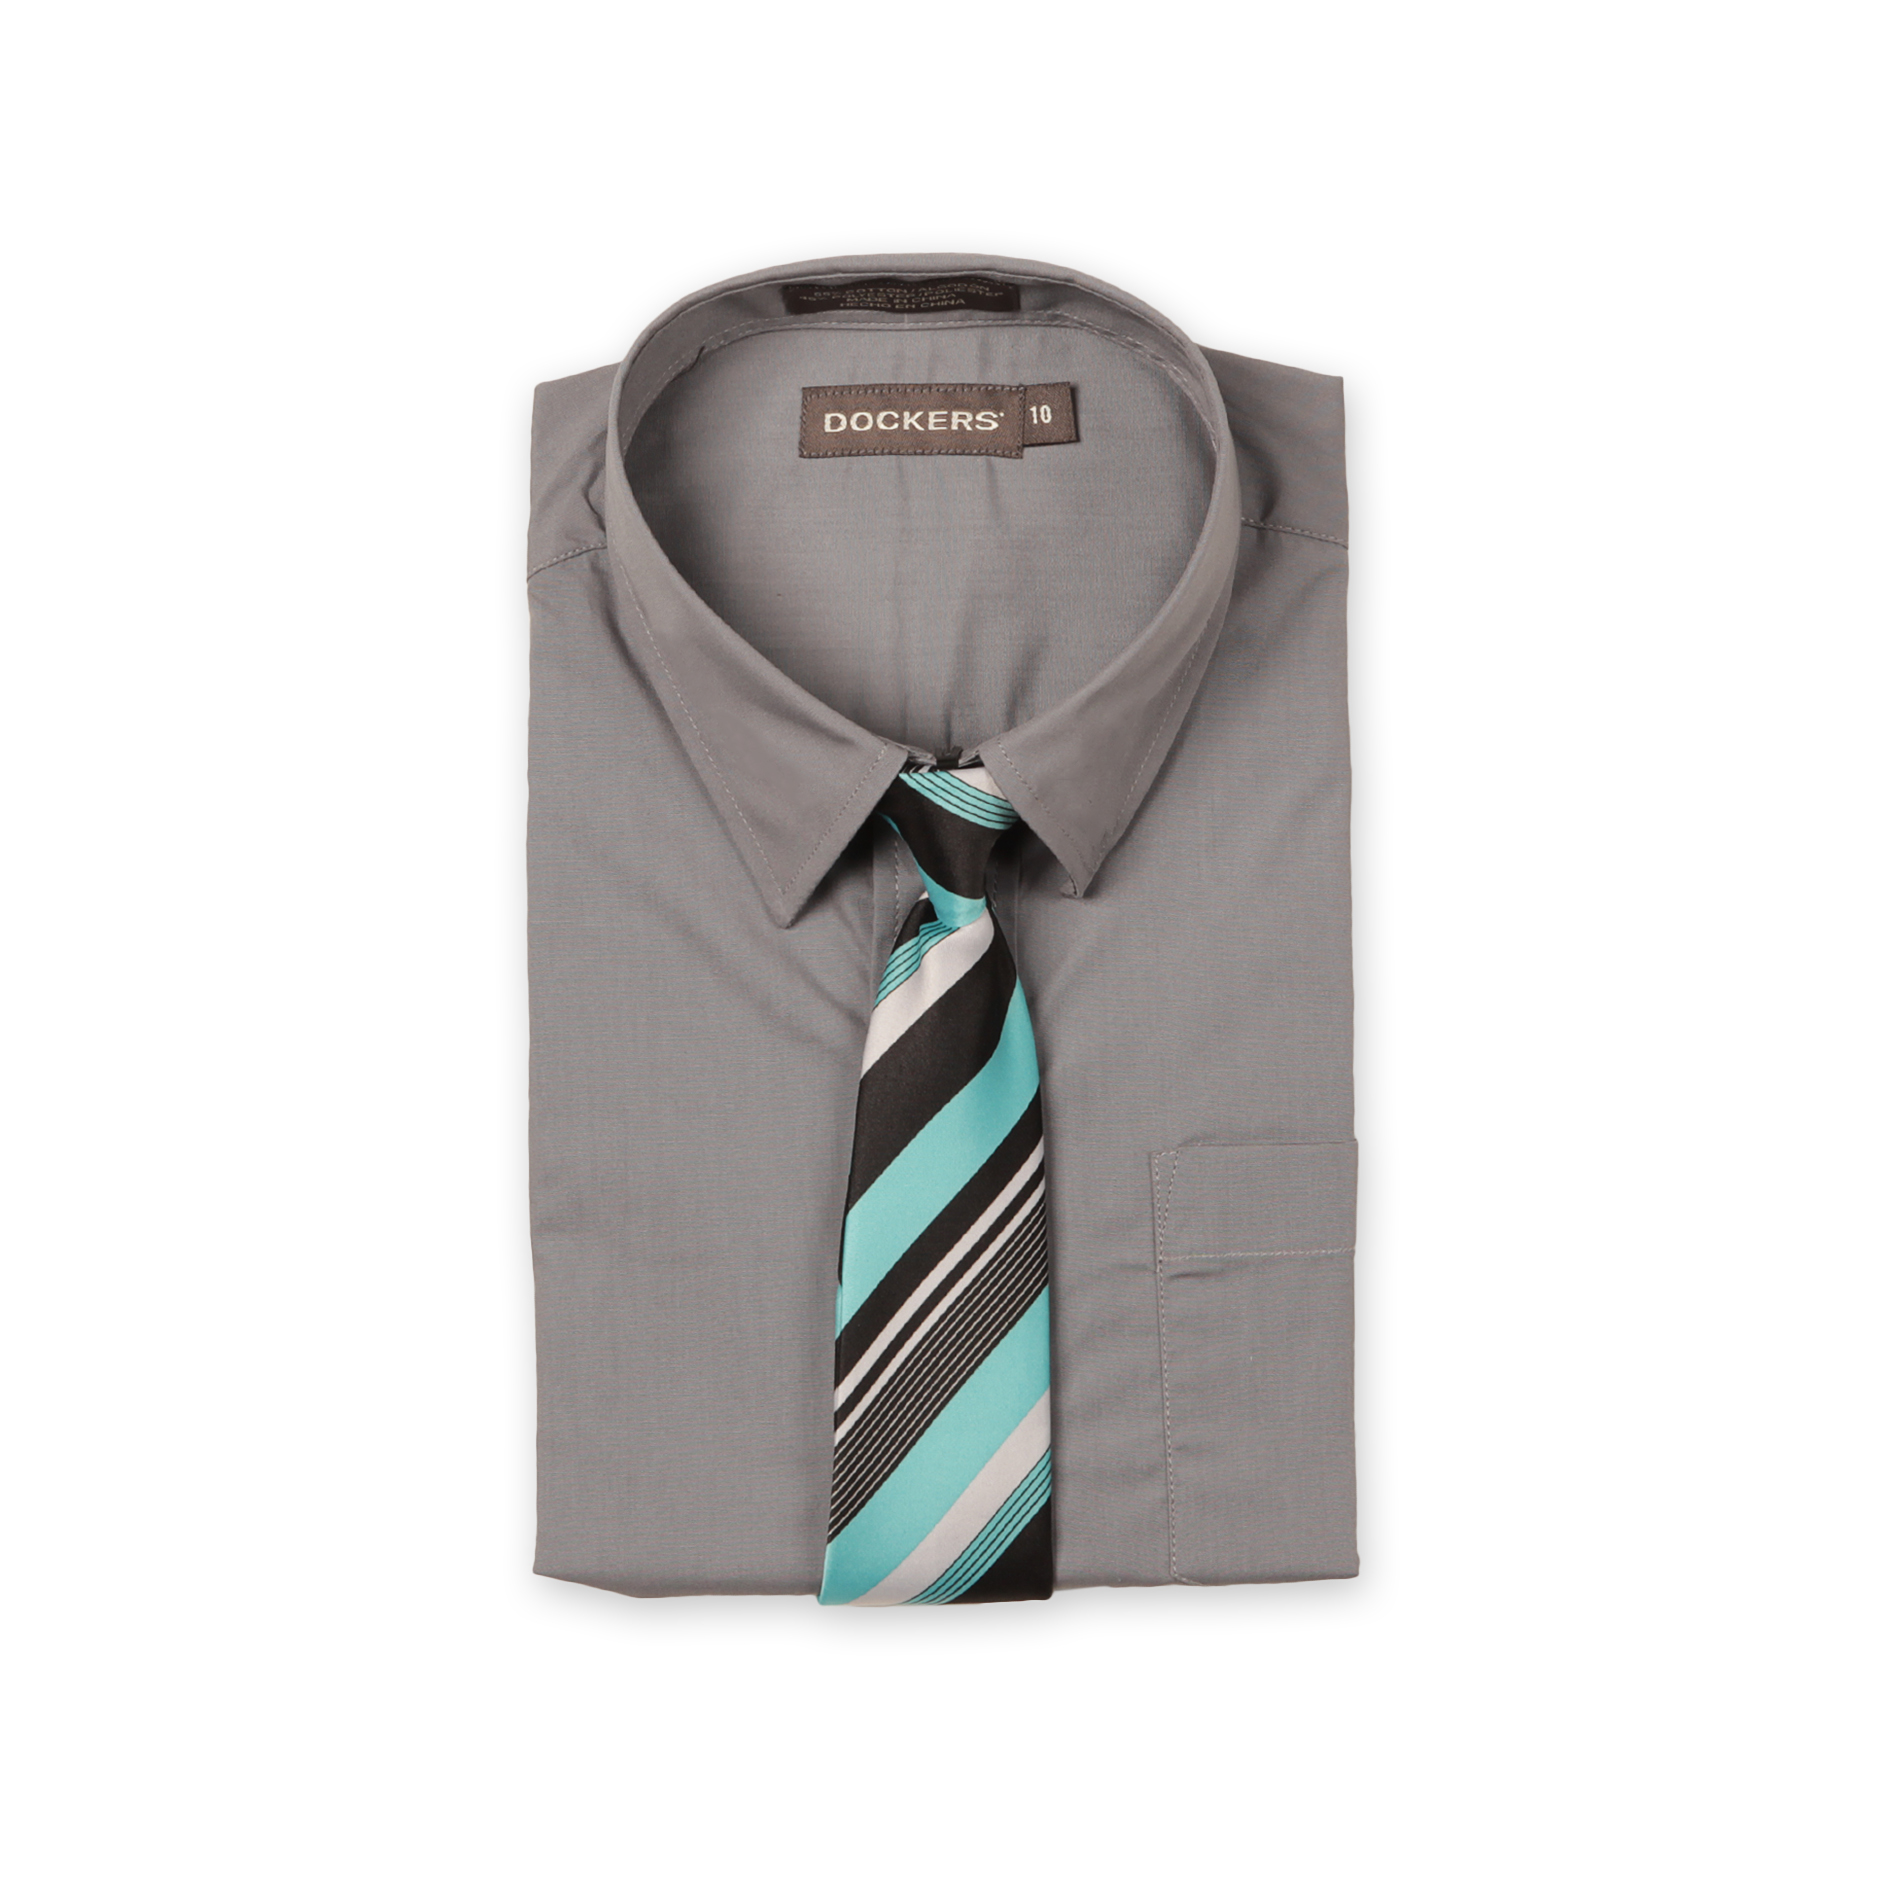 Dockers Boy's Dress Shirt and Tie